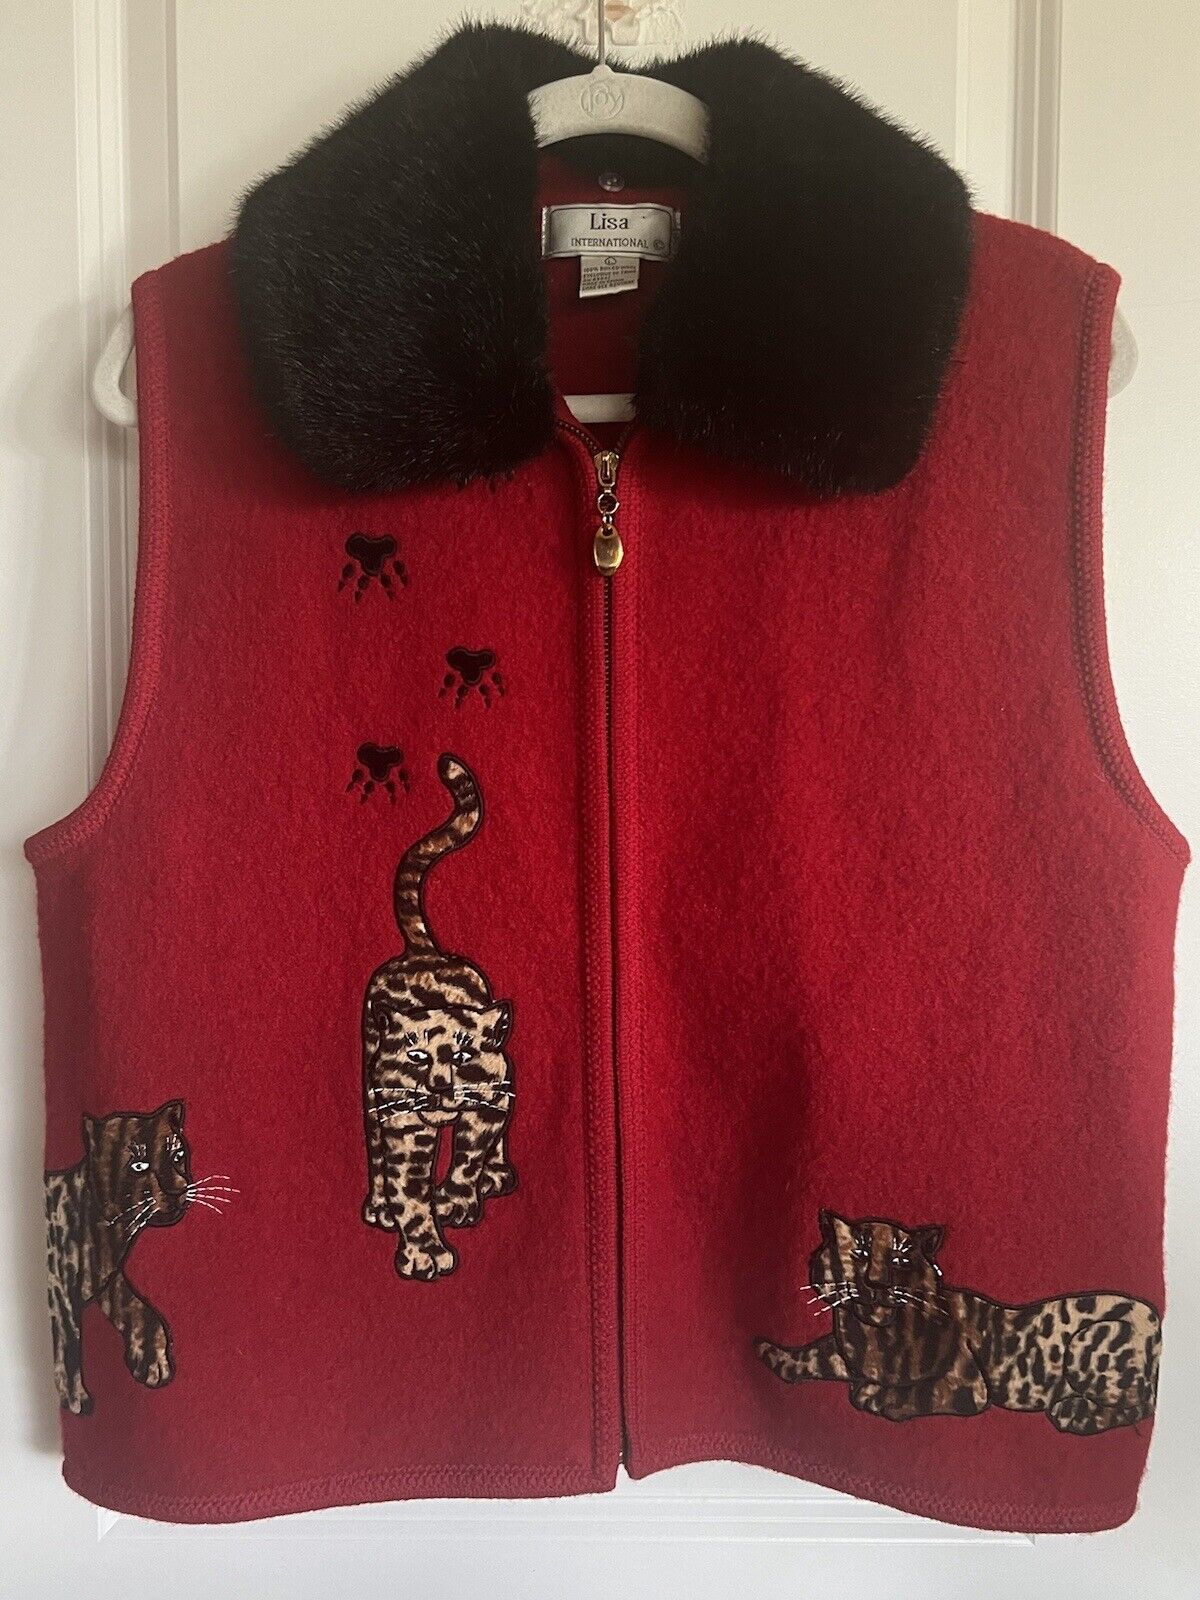 Lisa International Red Boiled Wool Vest Removable… - image 1